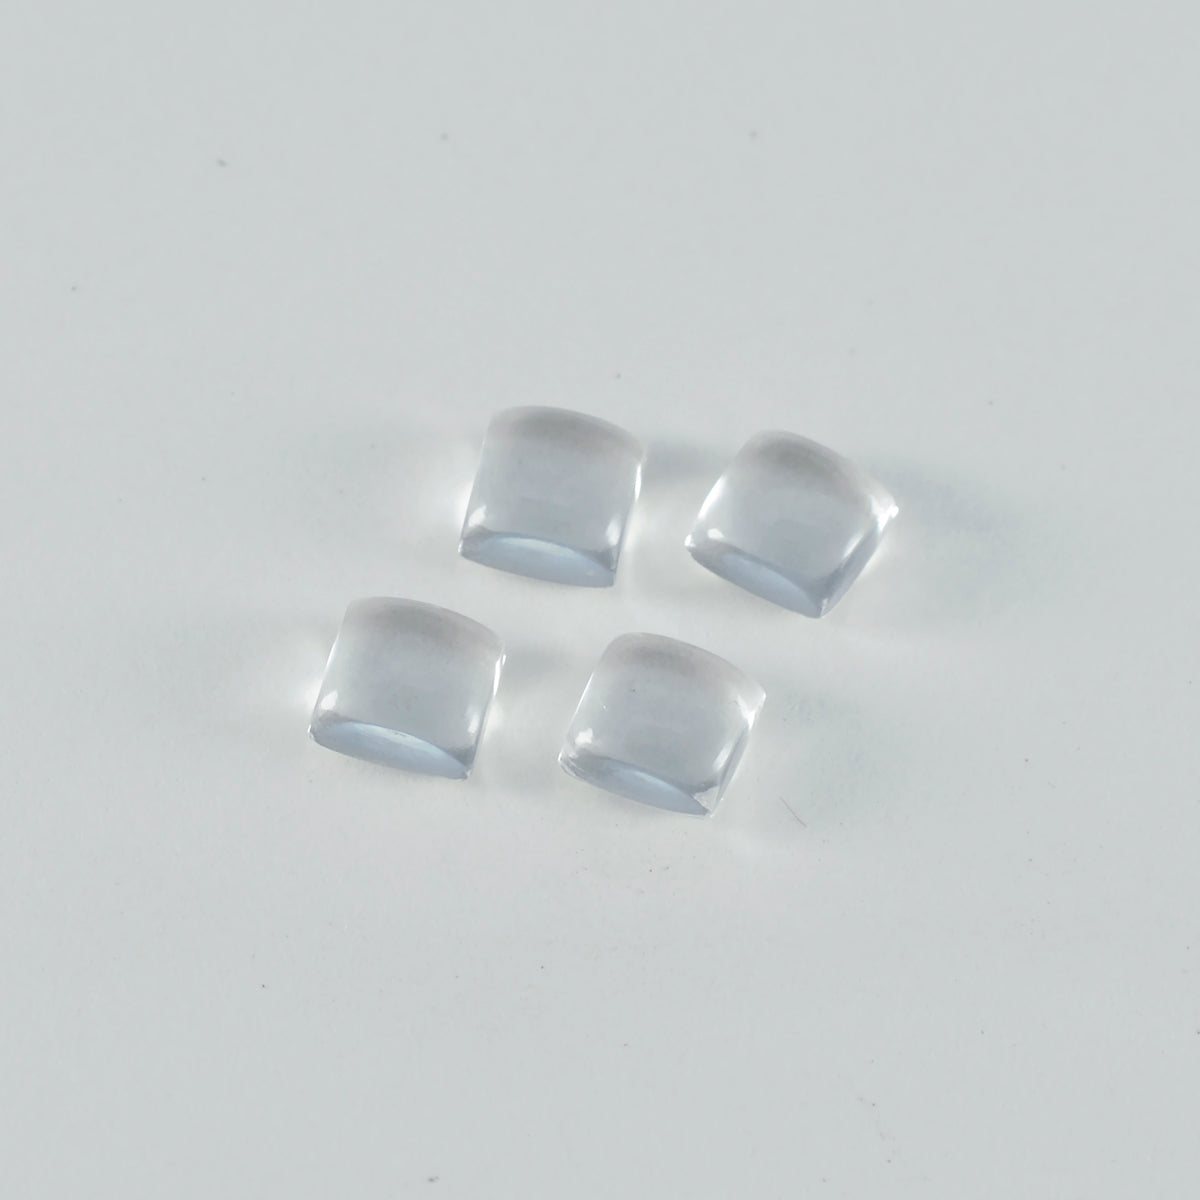 riyogems 1 шт., белый кристалл кварца, кабошон 9x9 мм, квадратная форма, прекрасное качество, свободные драгоценные камни